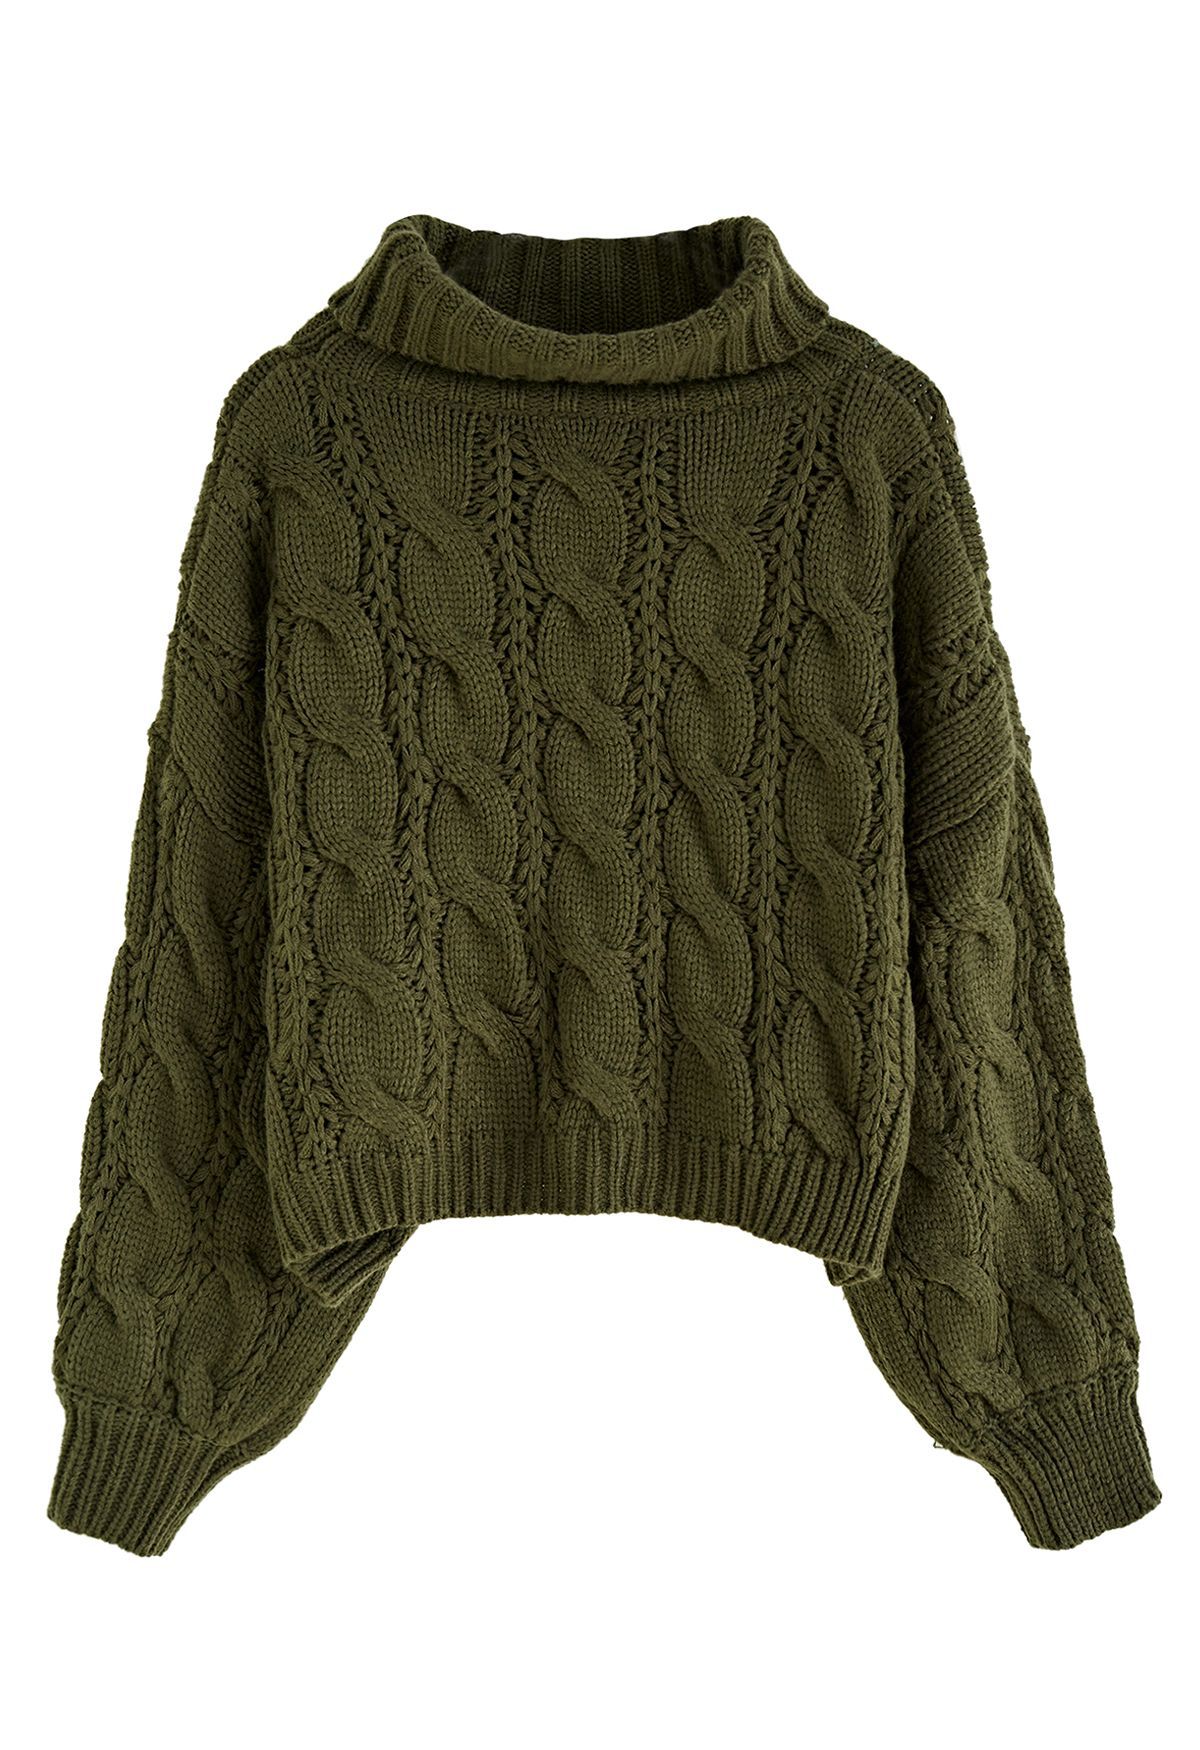 Turtleneck Braid Knit Crop Sweater in Army Green | Chicwish